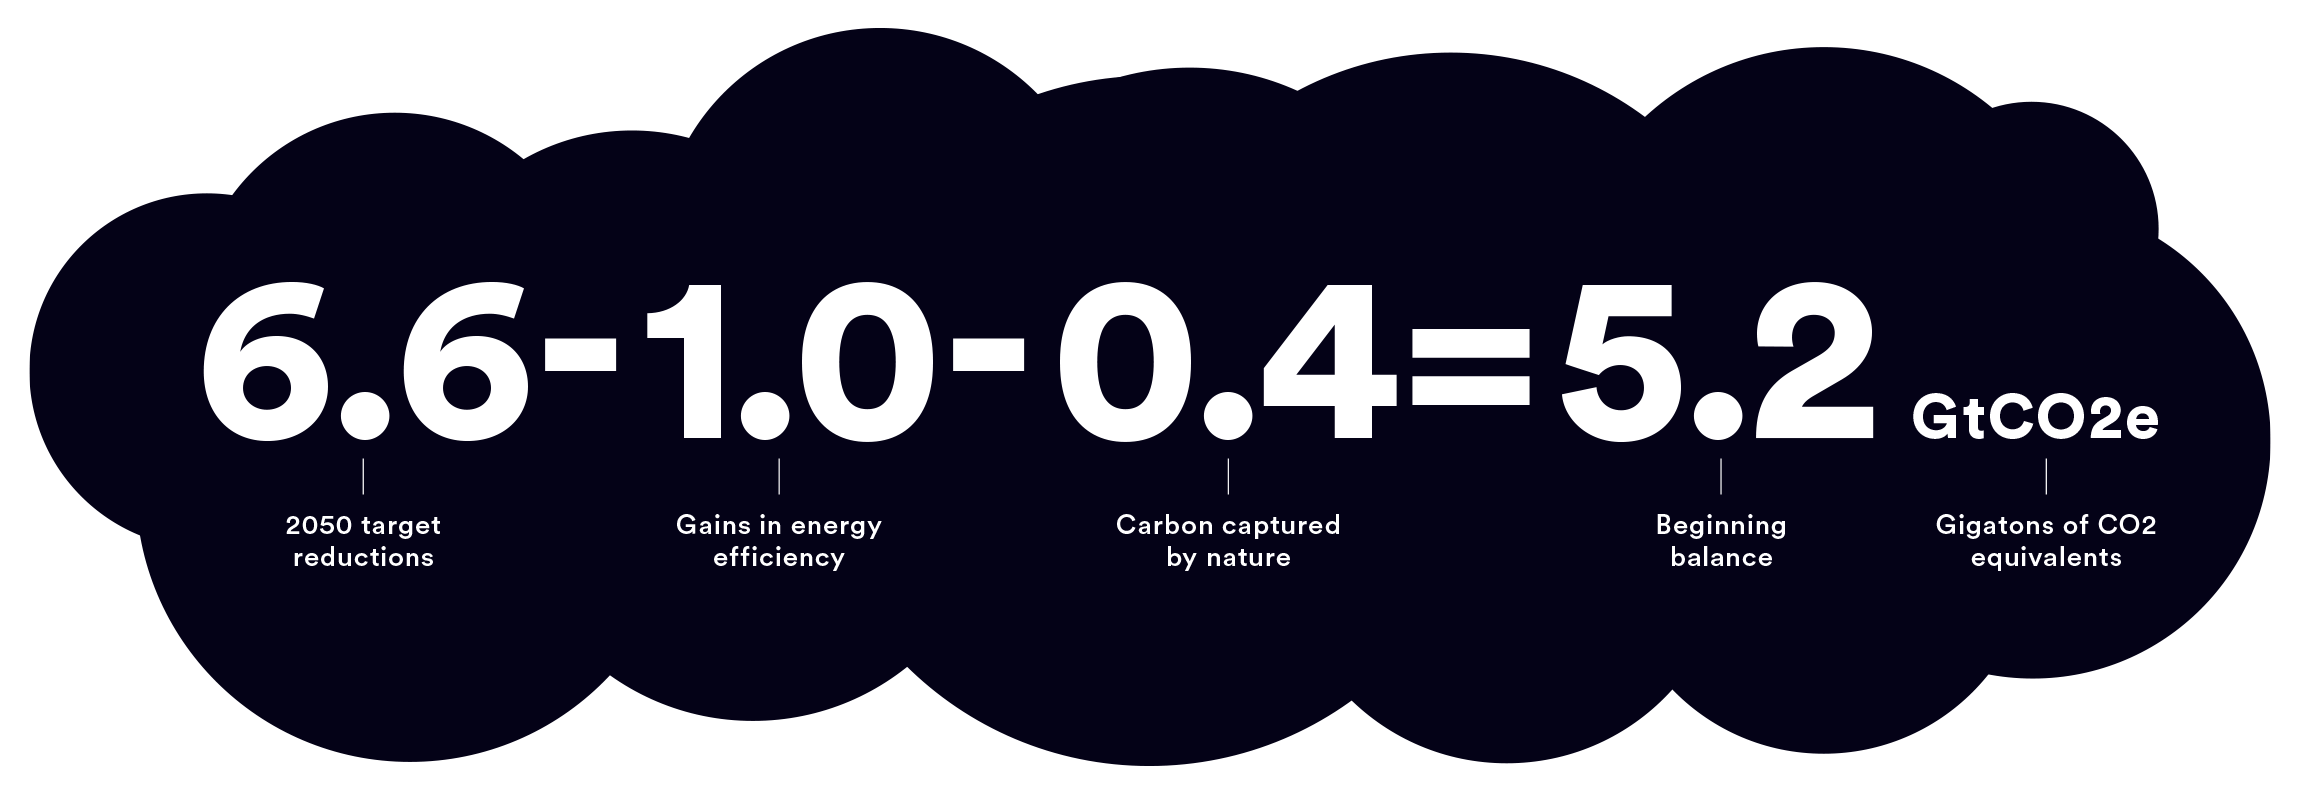 carbon equation 62887 xapaob - با هفت استارت‌آپ فناوری سبز آشنا شوید تا تغییرات آب و هوایی را اصلاح کنید.
یک گیگاتون (یا بیشتر) CO2 در یک زمان